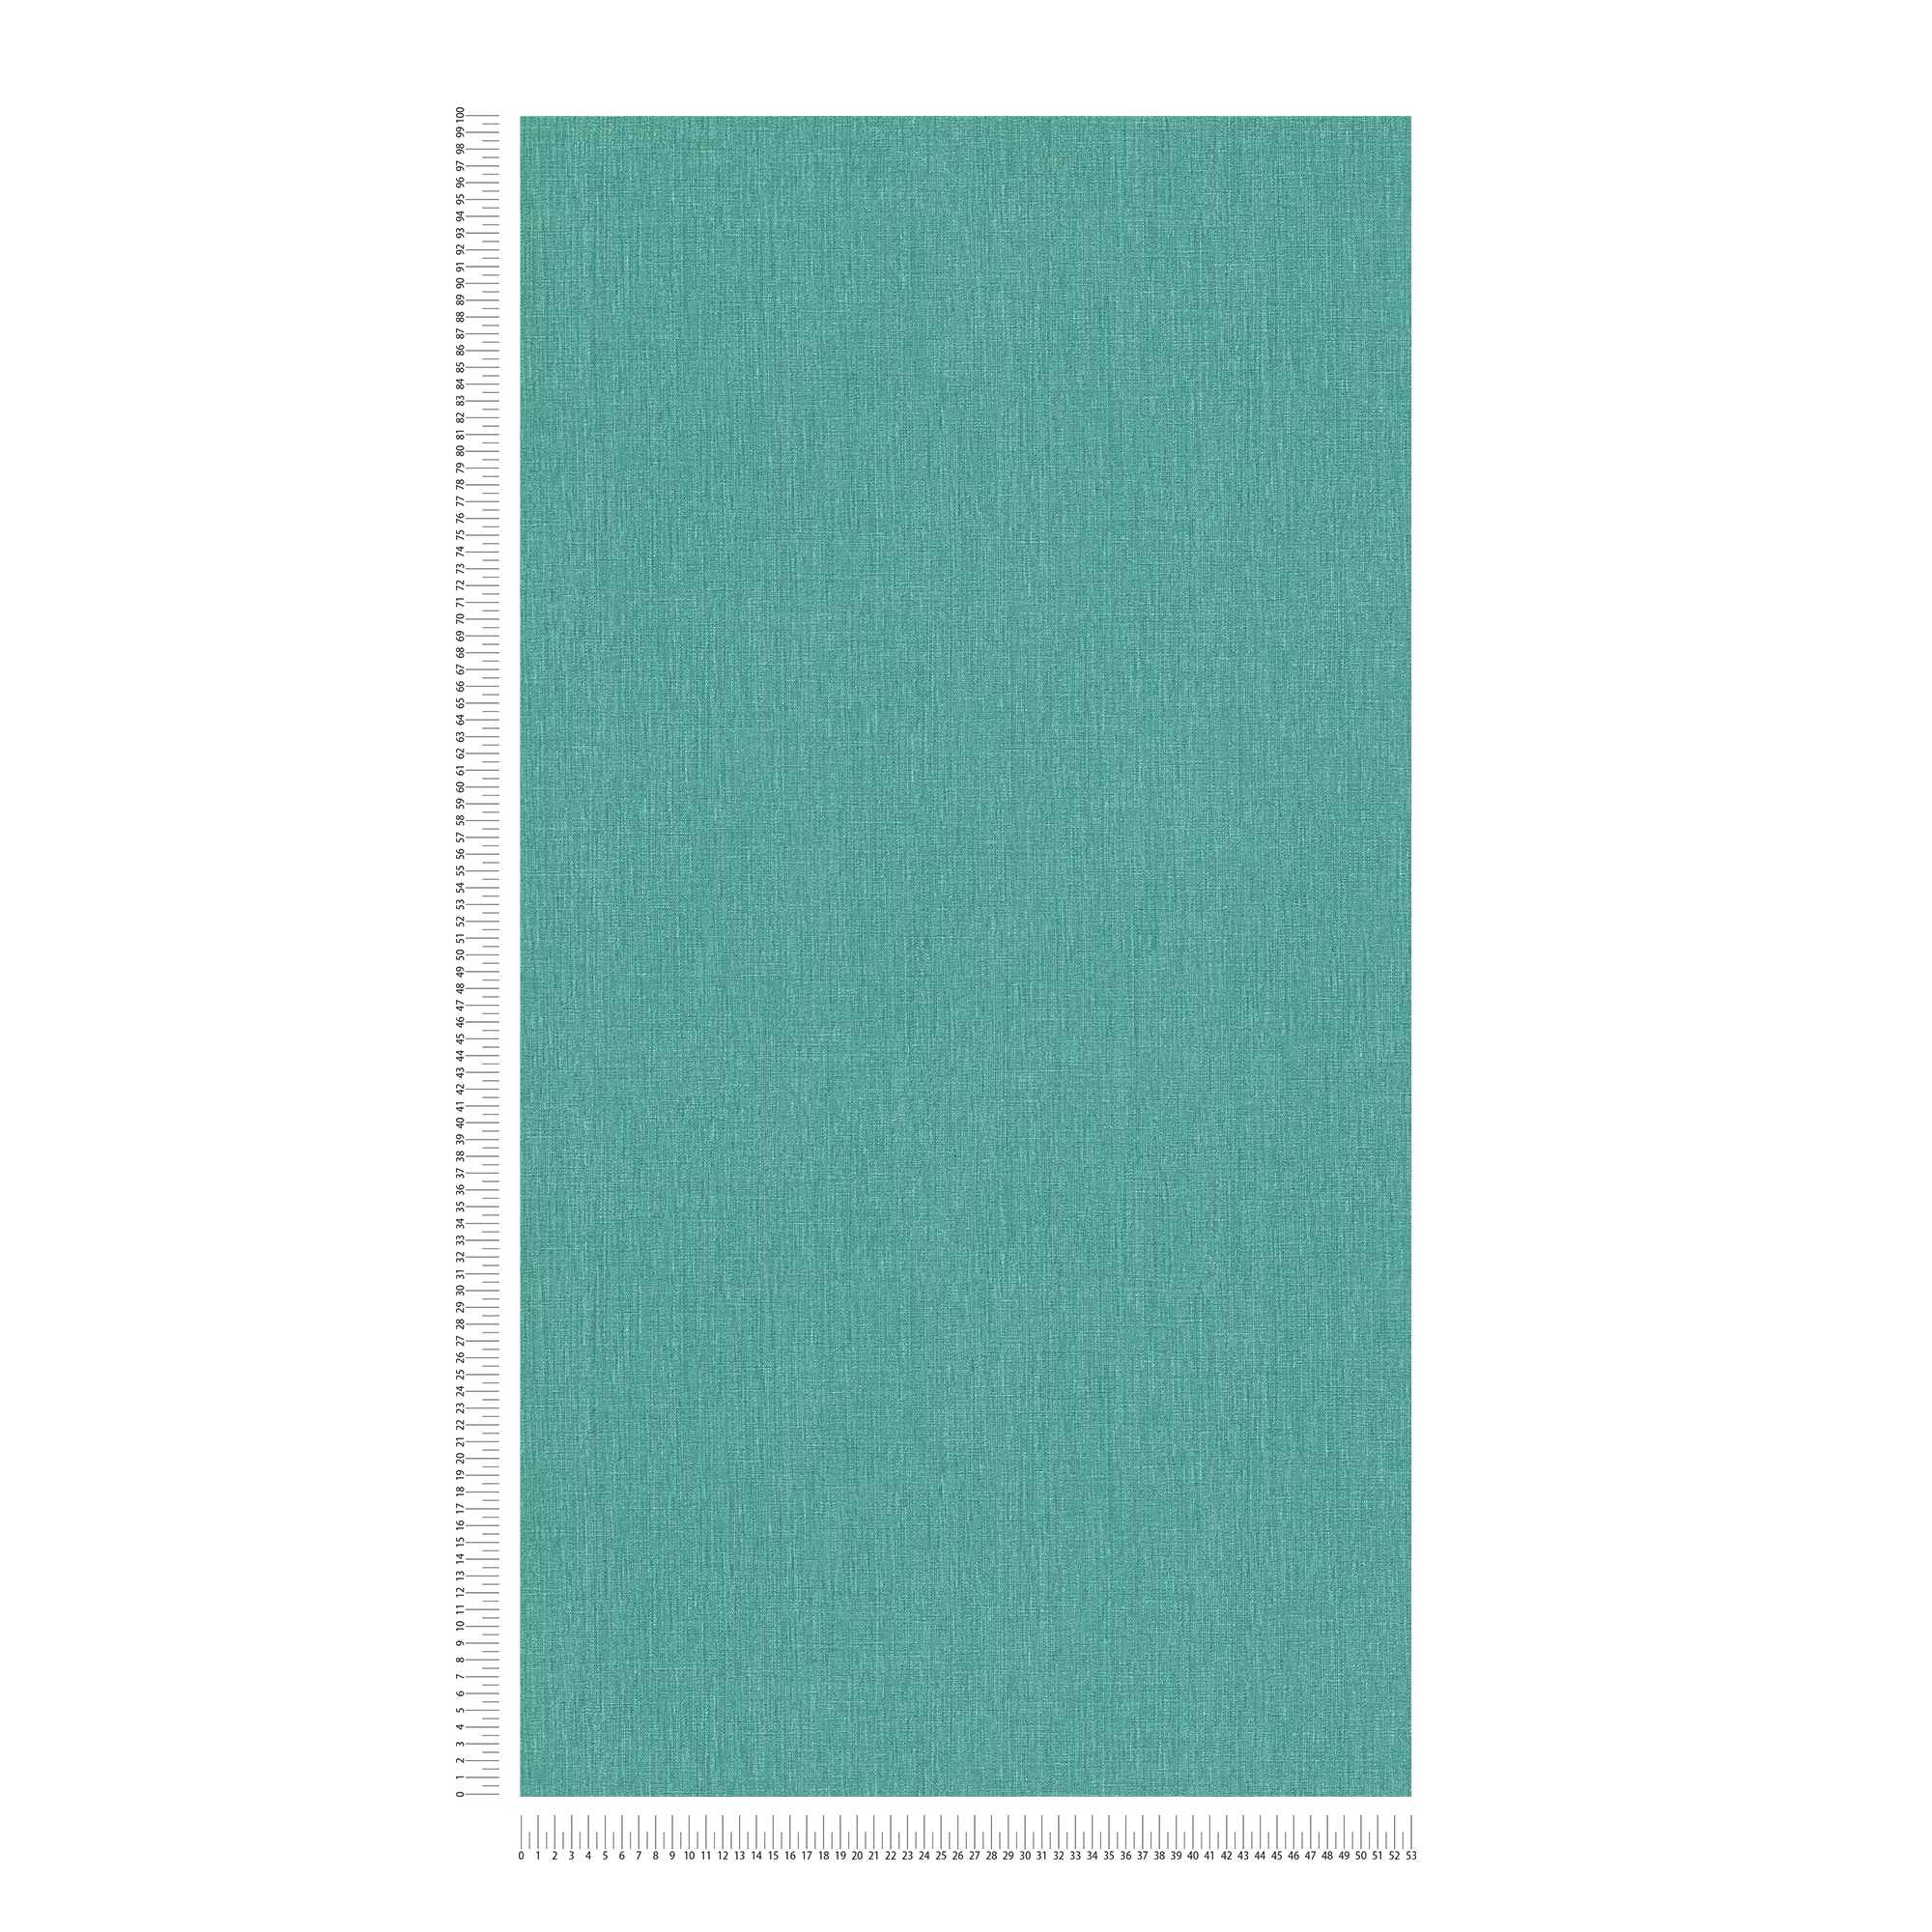             Plain wallpaper with texture on non-woven in matt look - green, blue
        